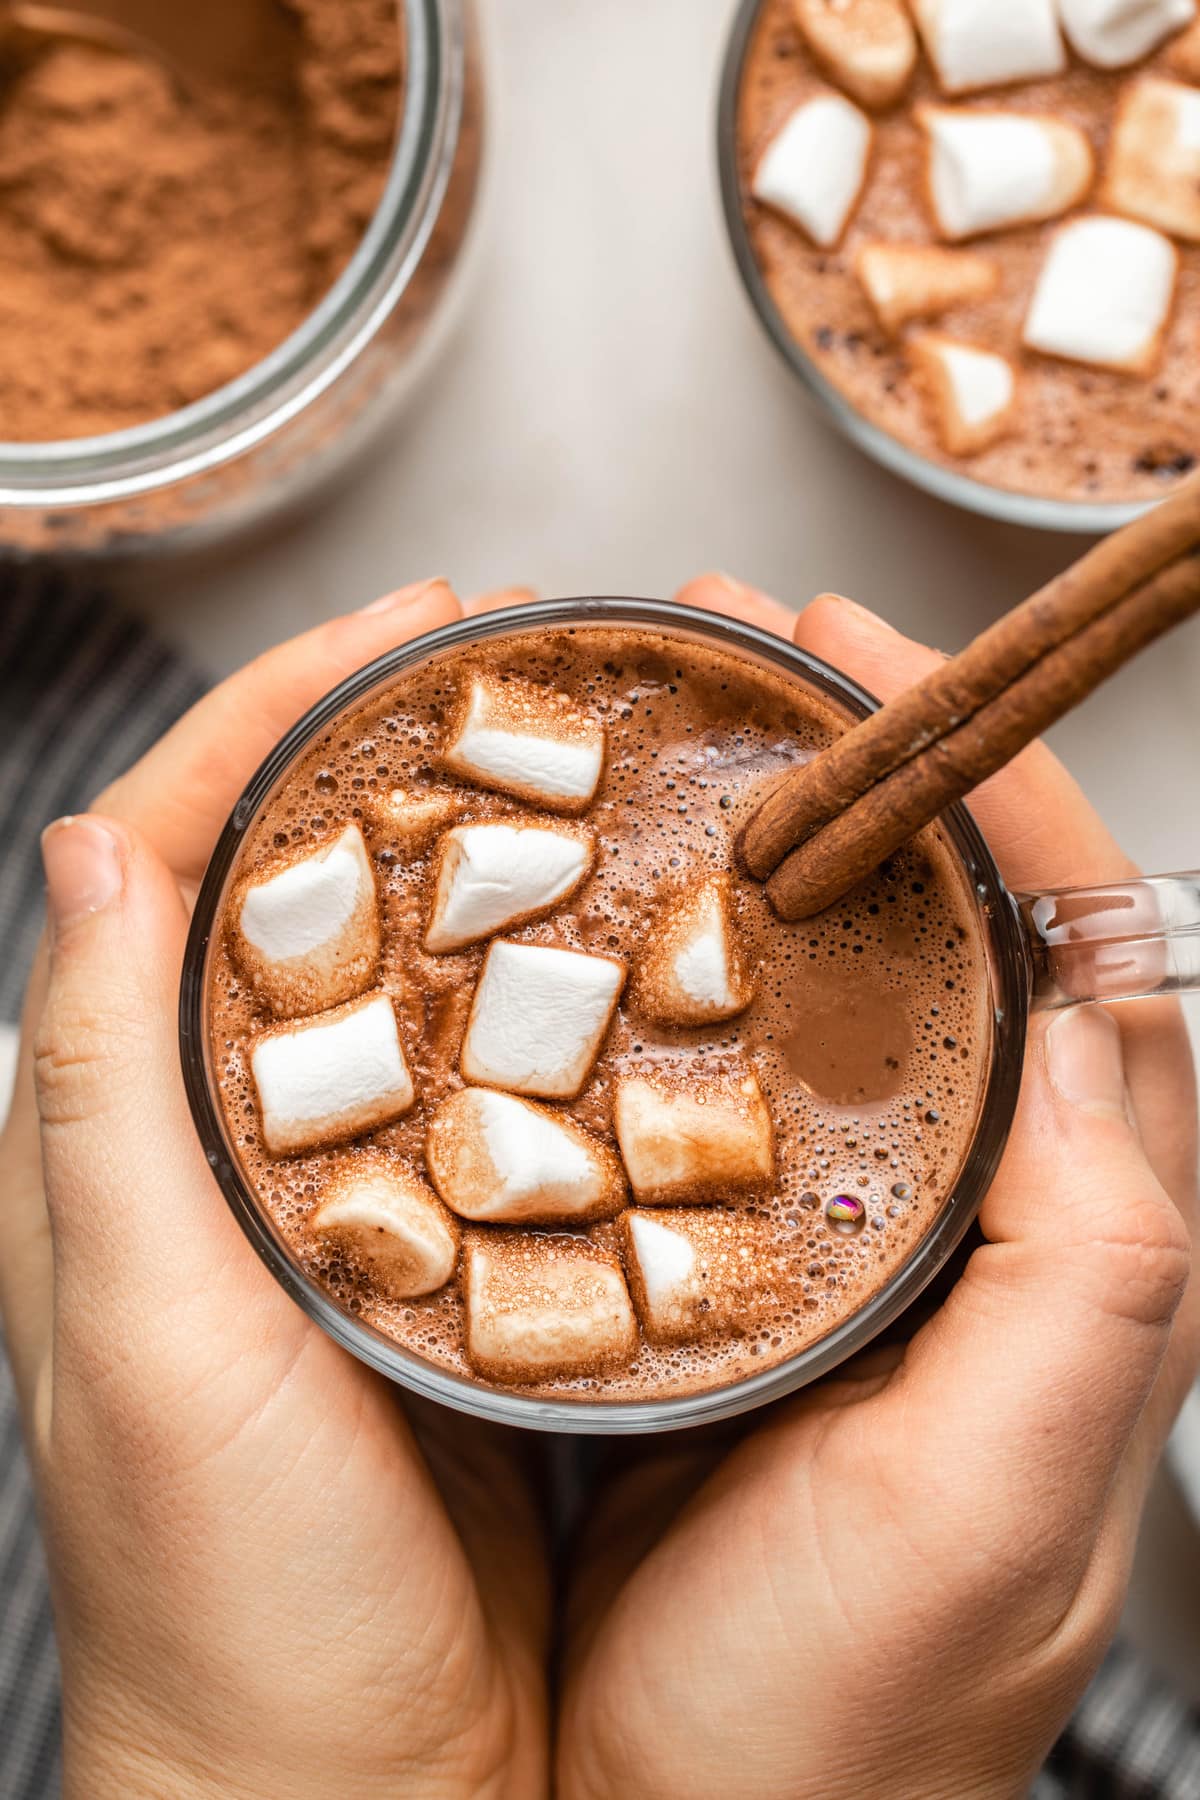 Hot Chocolate Stir Sticks - The Best Blog Recipes